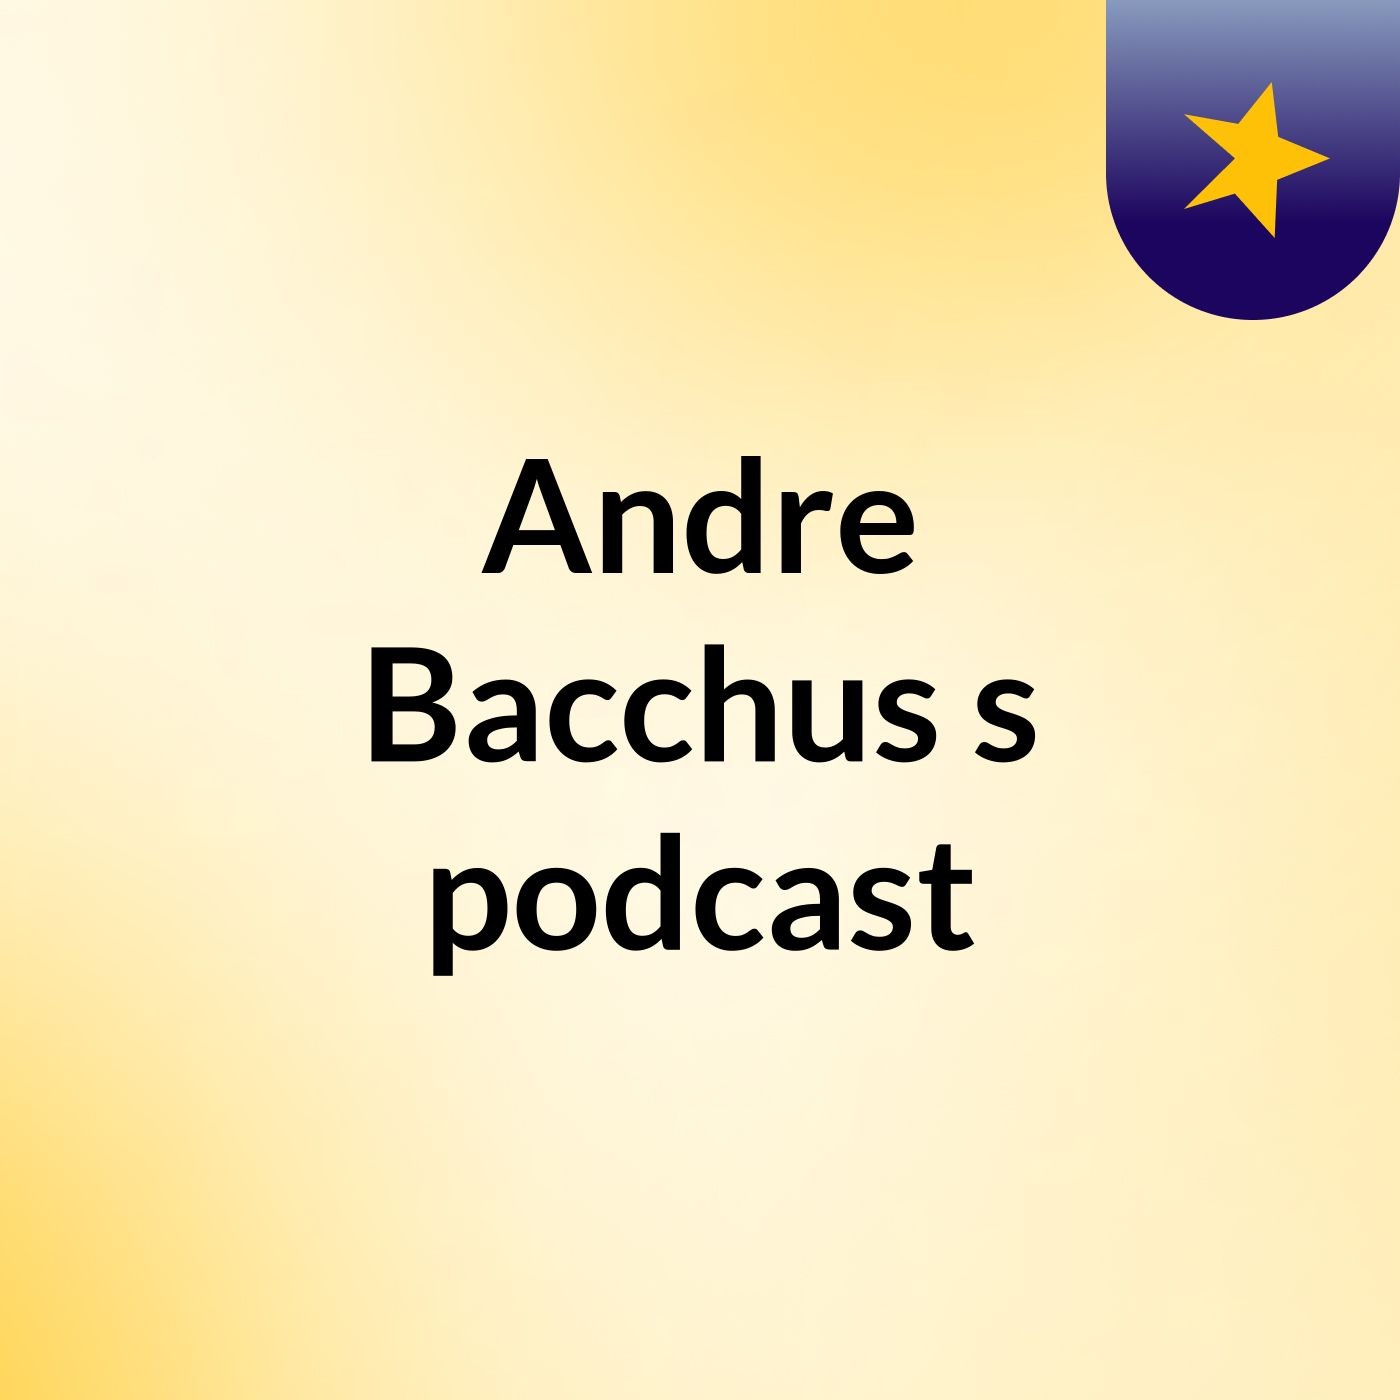 Episode 22 - Andre Bacchus's podcast